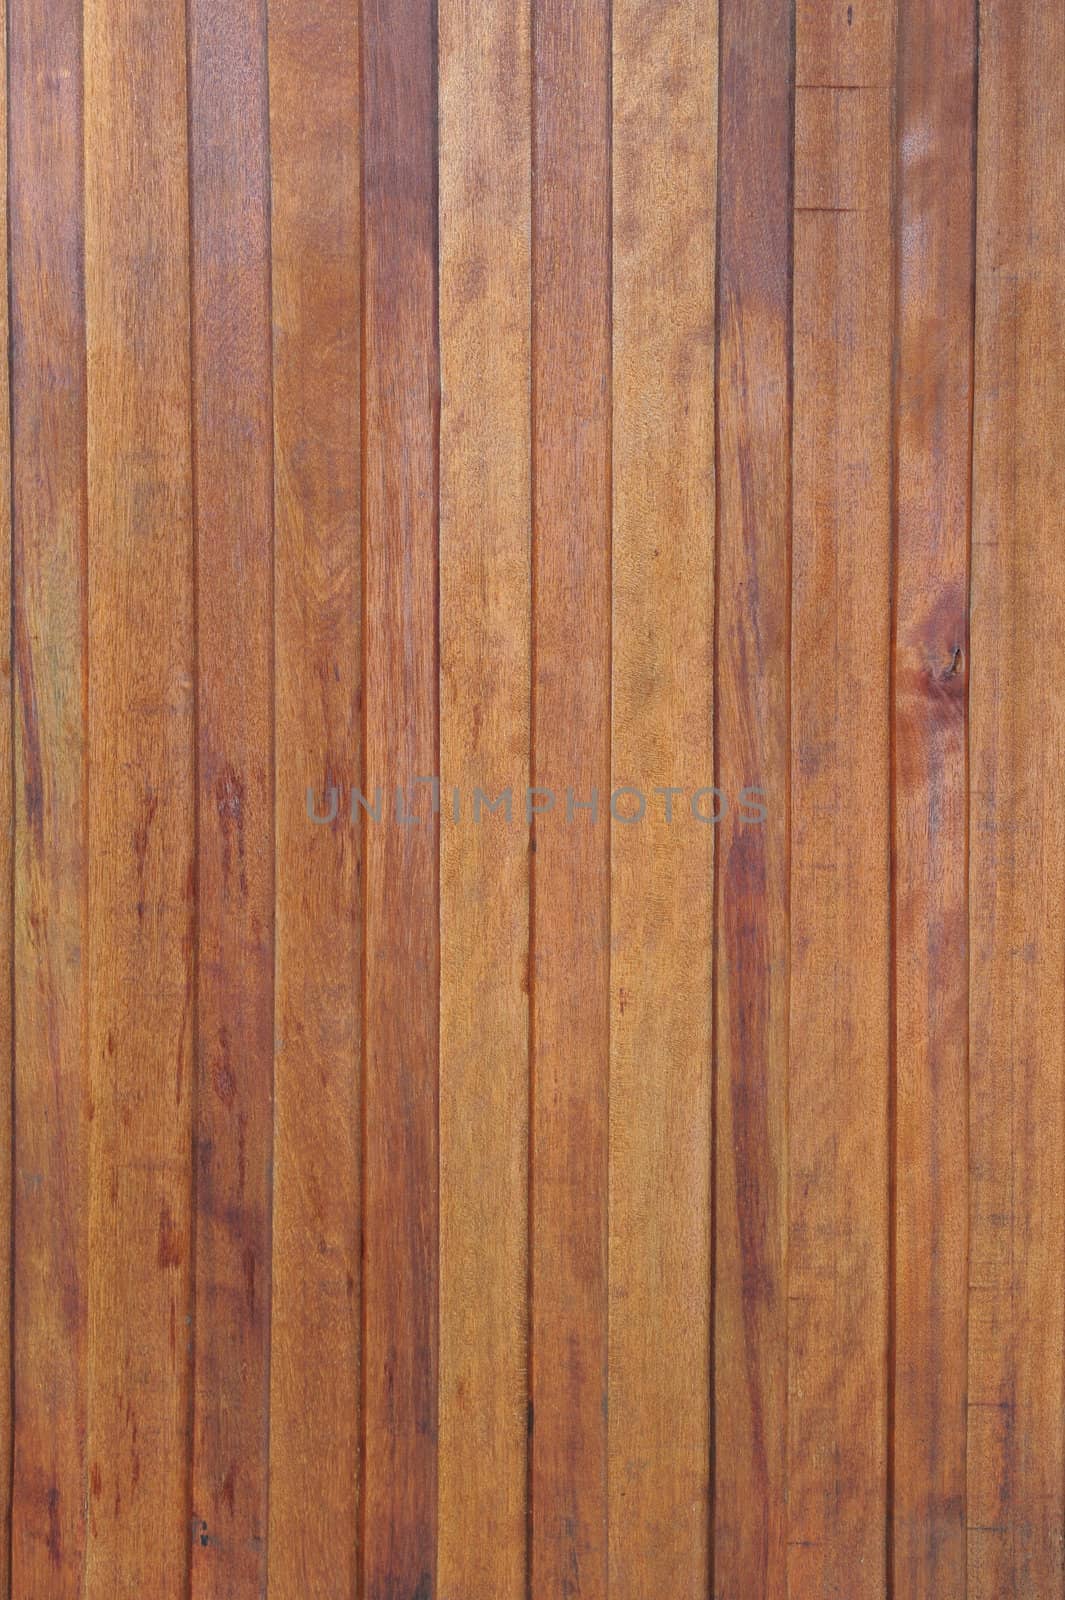 Wood Background by antpkr